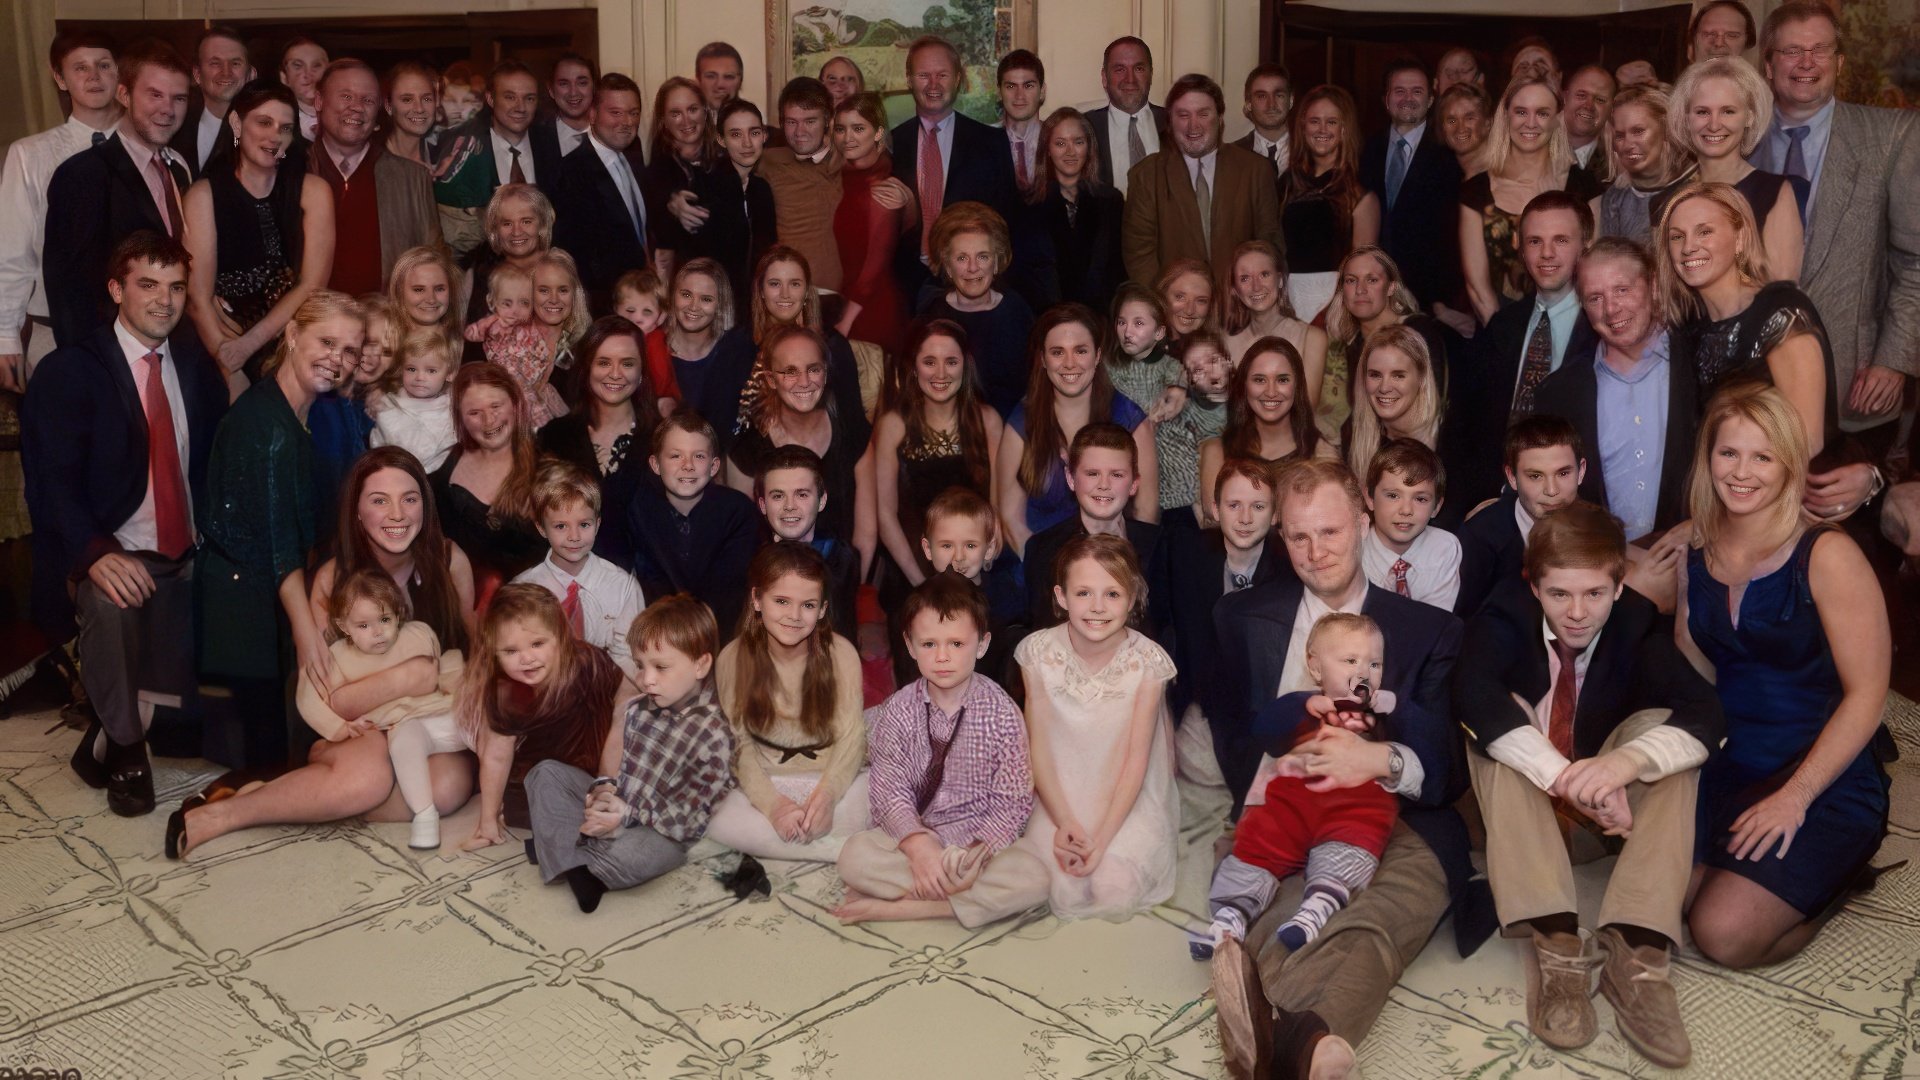 Kate Mara and her relatives